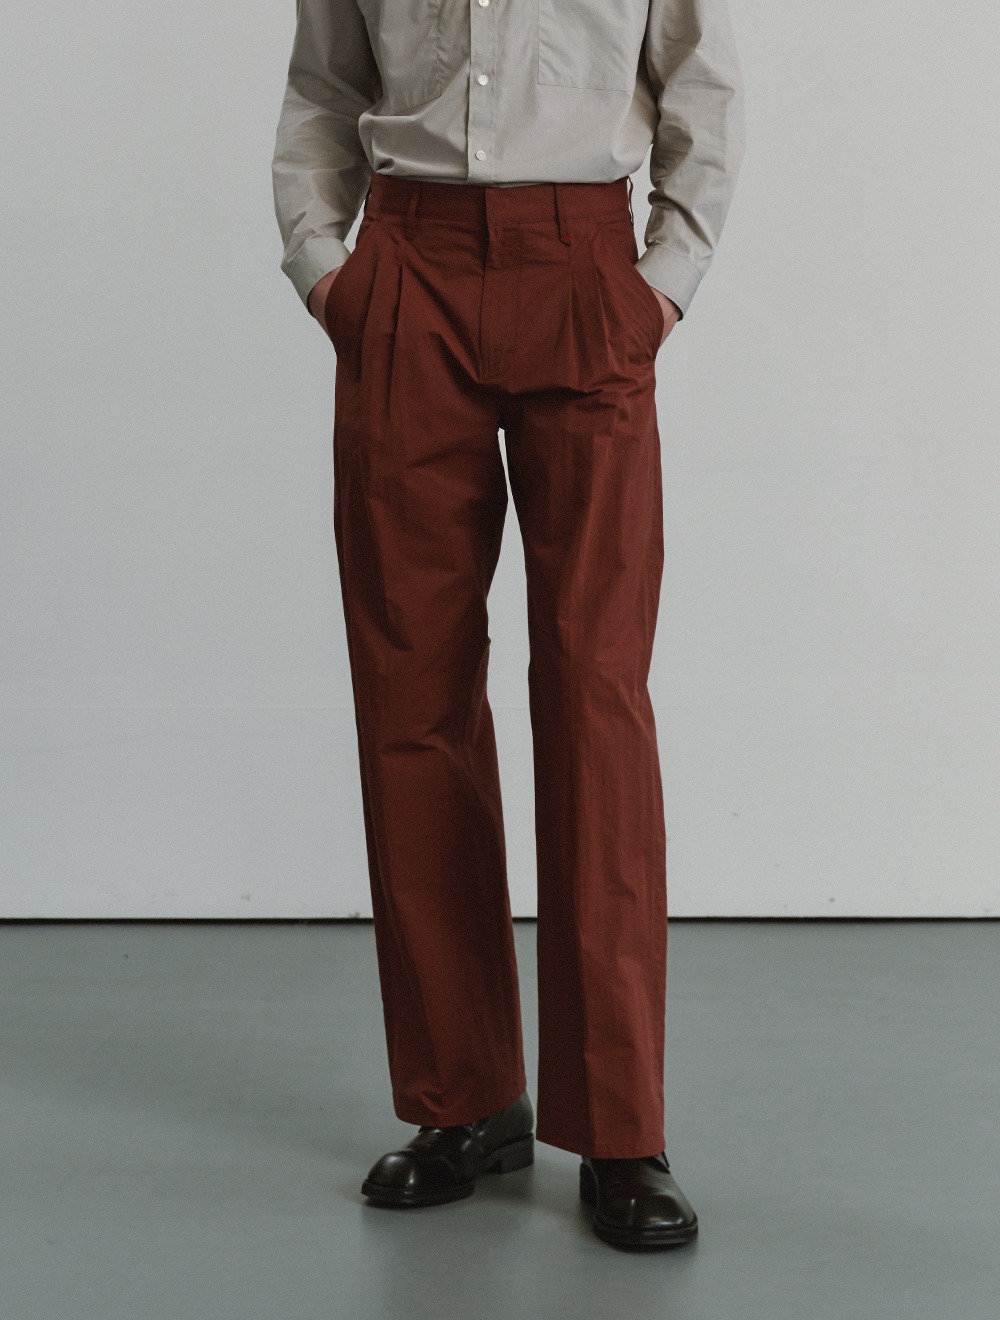 Nylon Crease Line Pants (Brown)